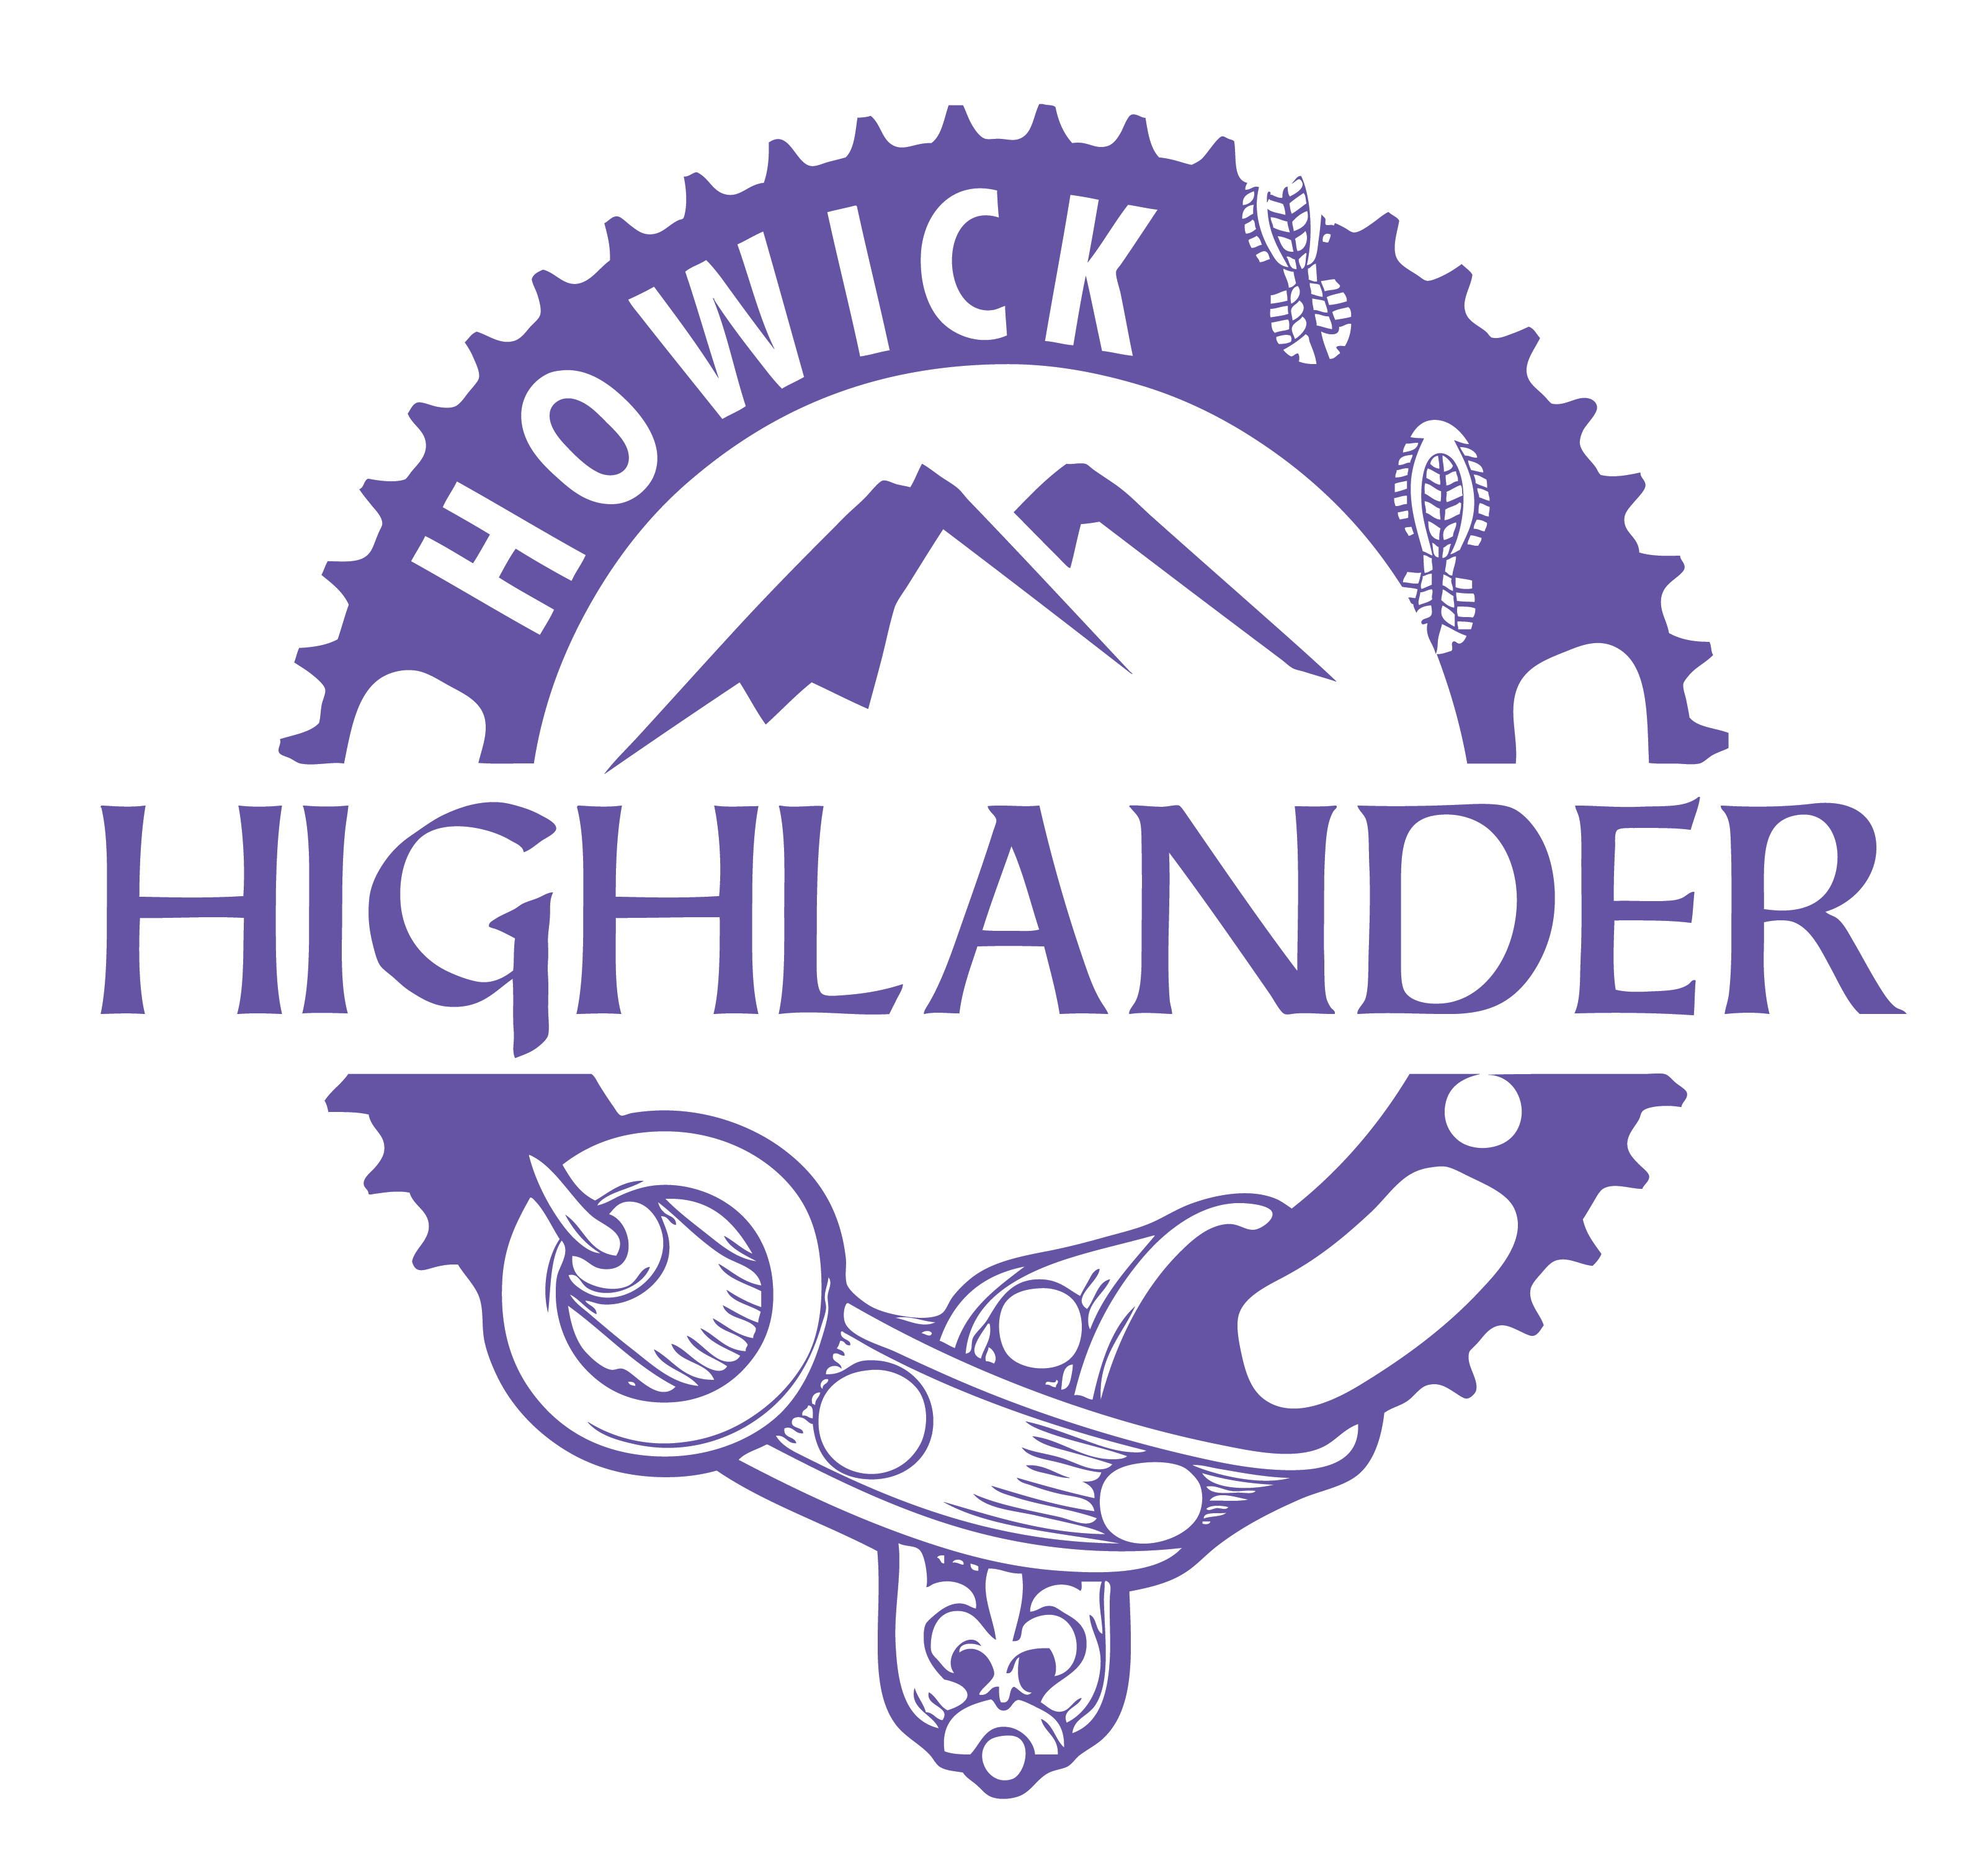 Howick Highlander